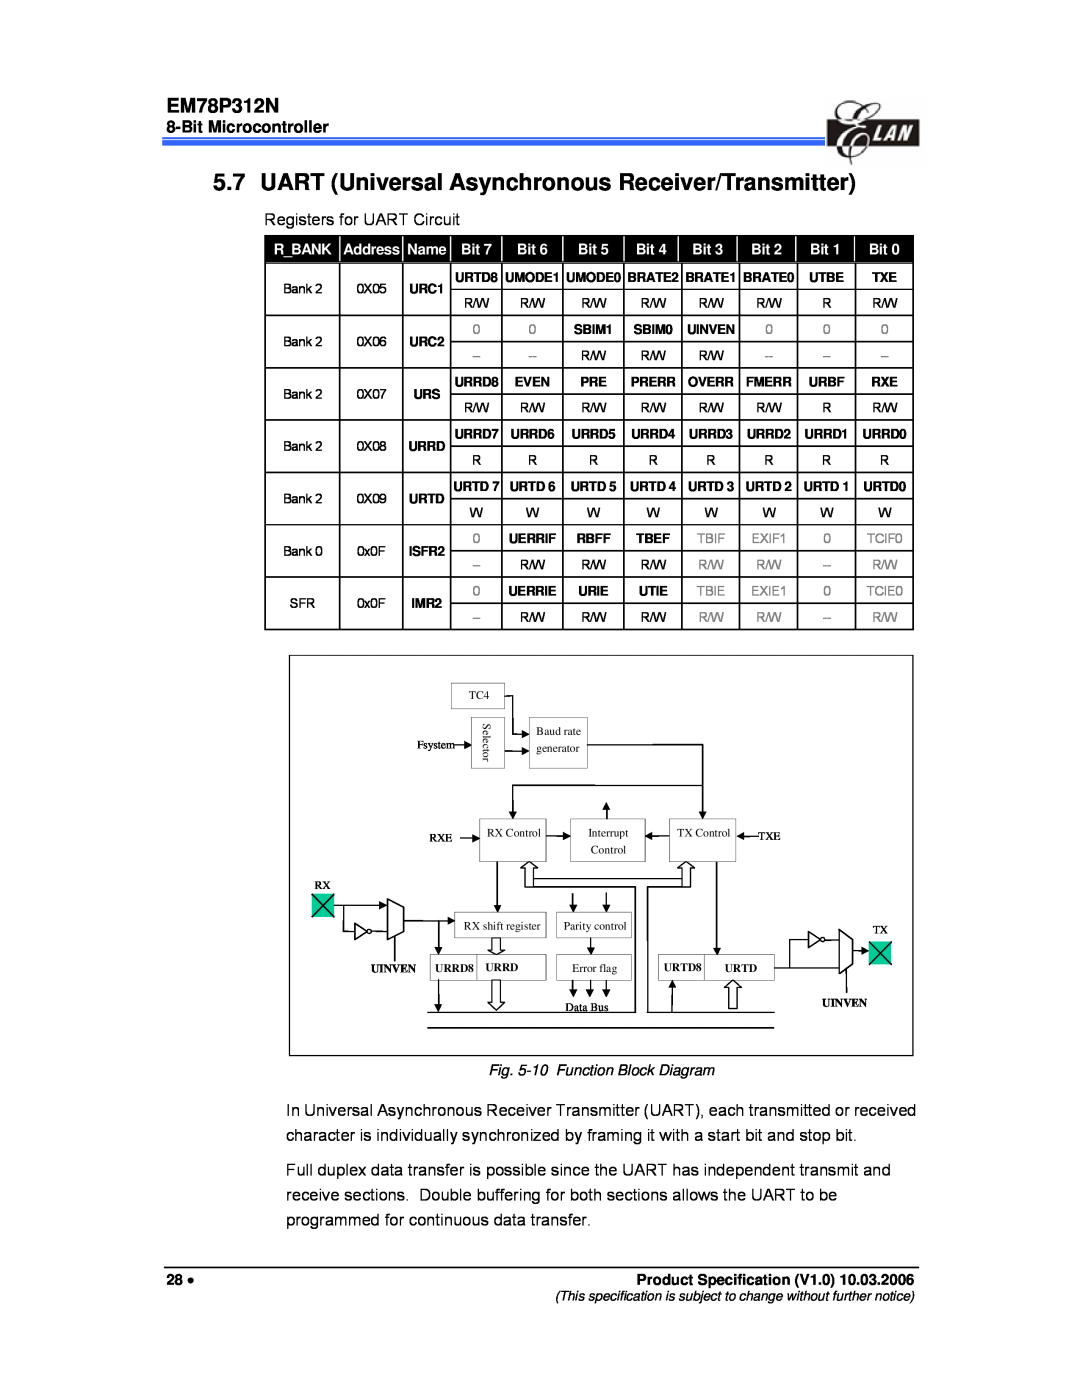 IBM EM78P312N manual UART Universal Asynchronous Receiver/Transmitter, Bit Microcontroller, Registers for UART Circuit 